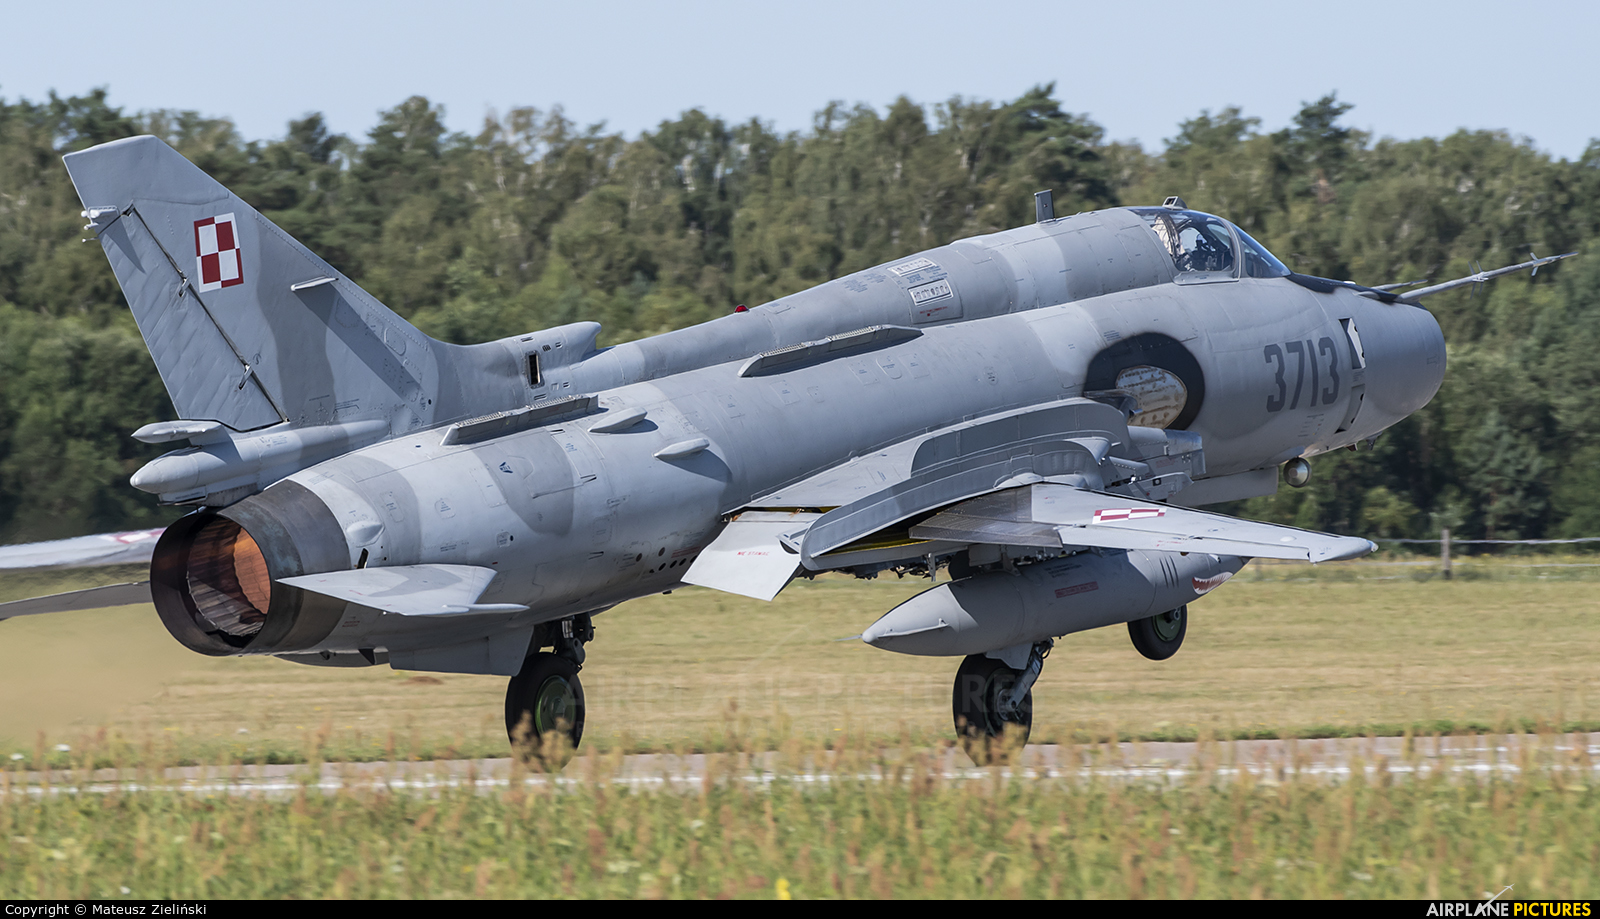 Poland - Air Force 3713 aircraft at Świdwin